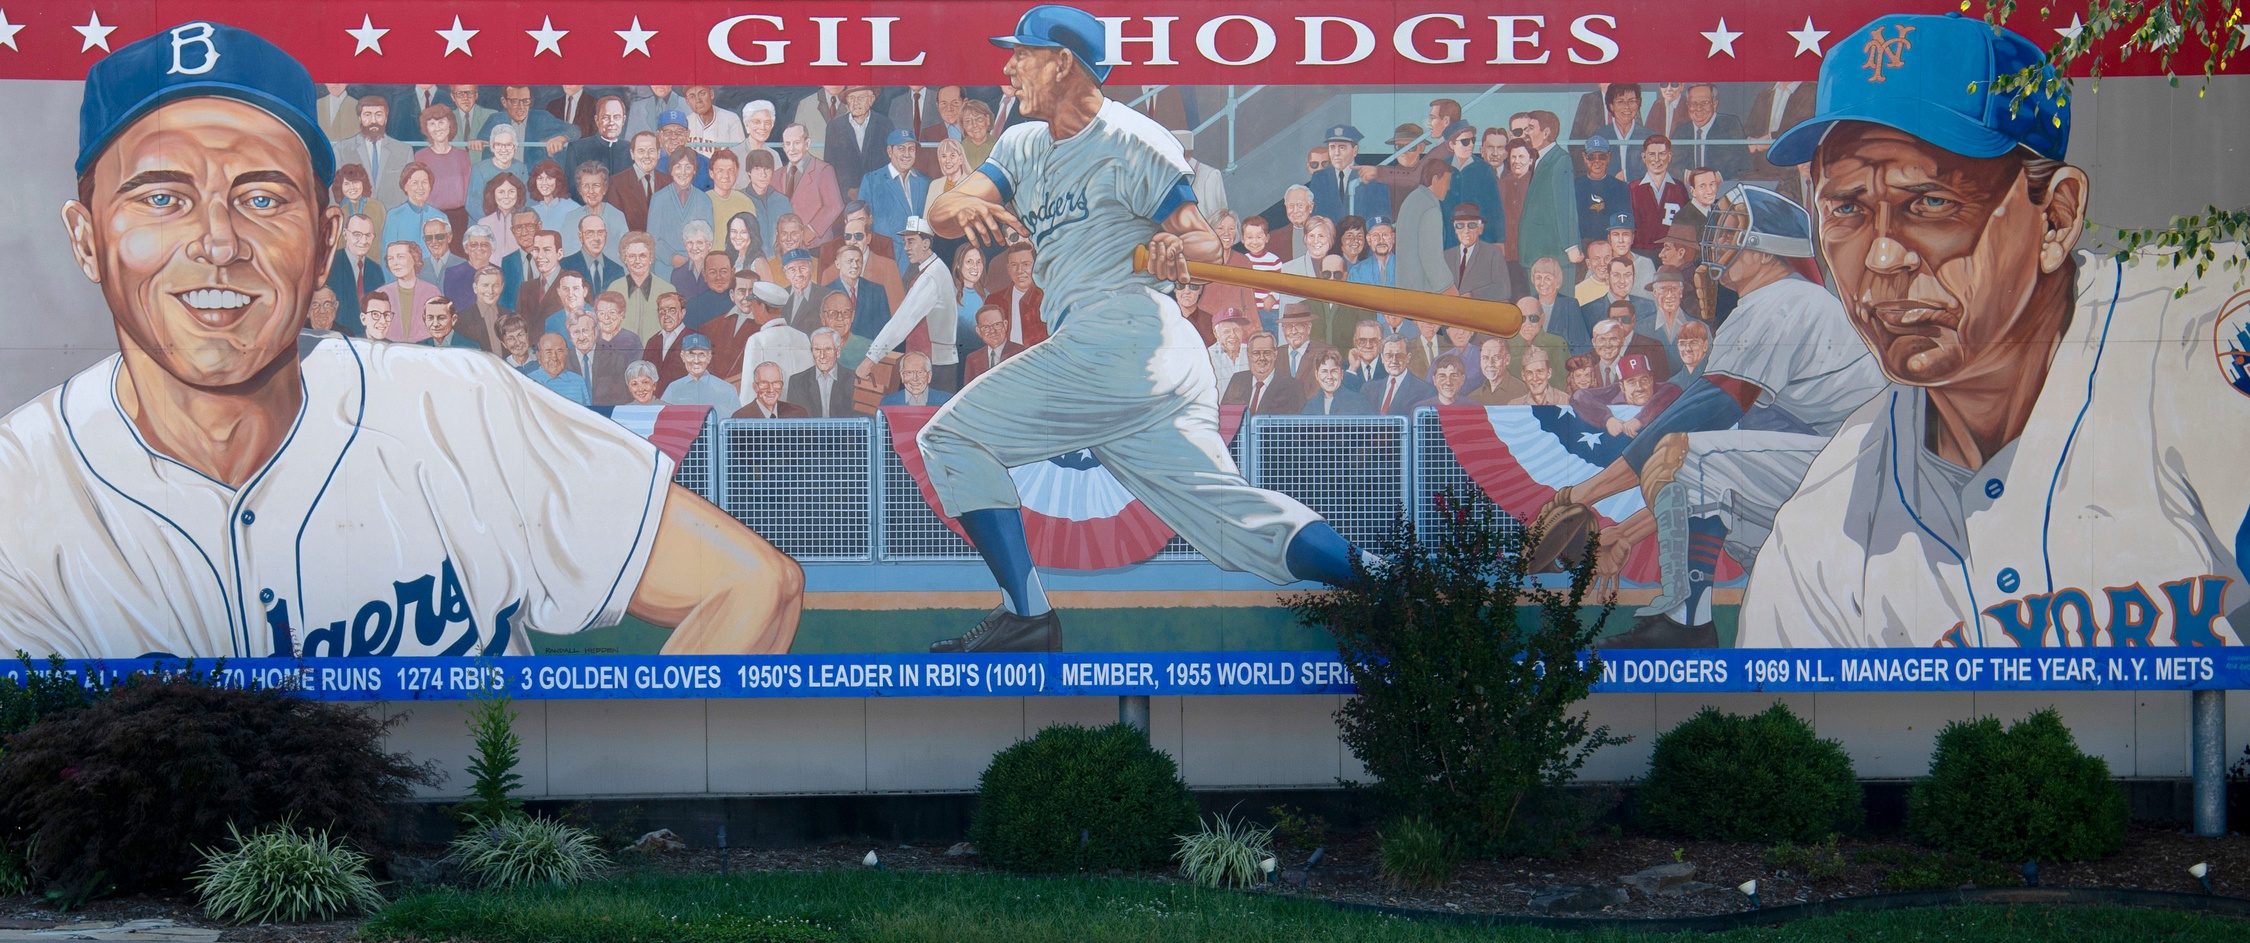 Dodgers retire No. 14 for Hall of Famer Gil Hodges 